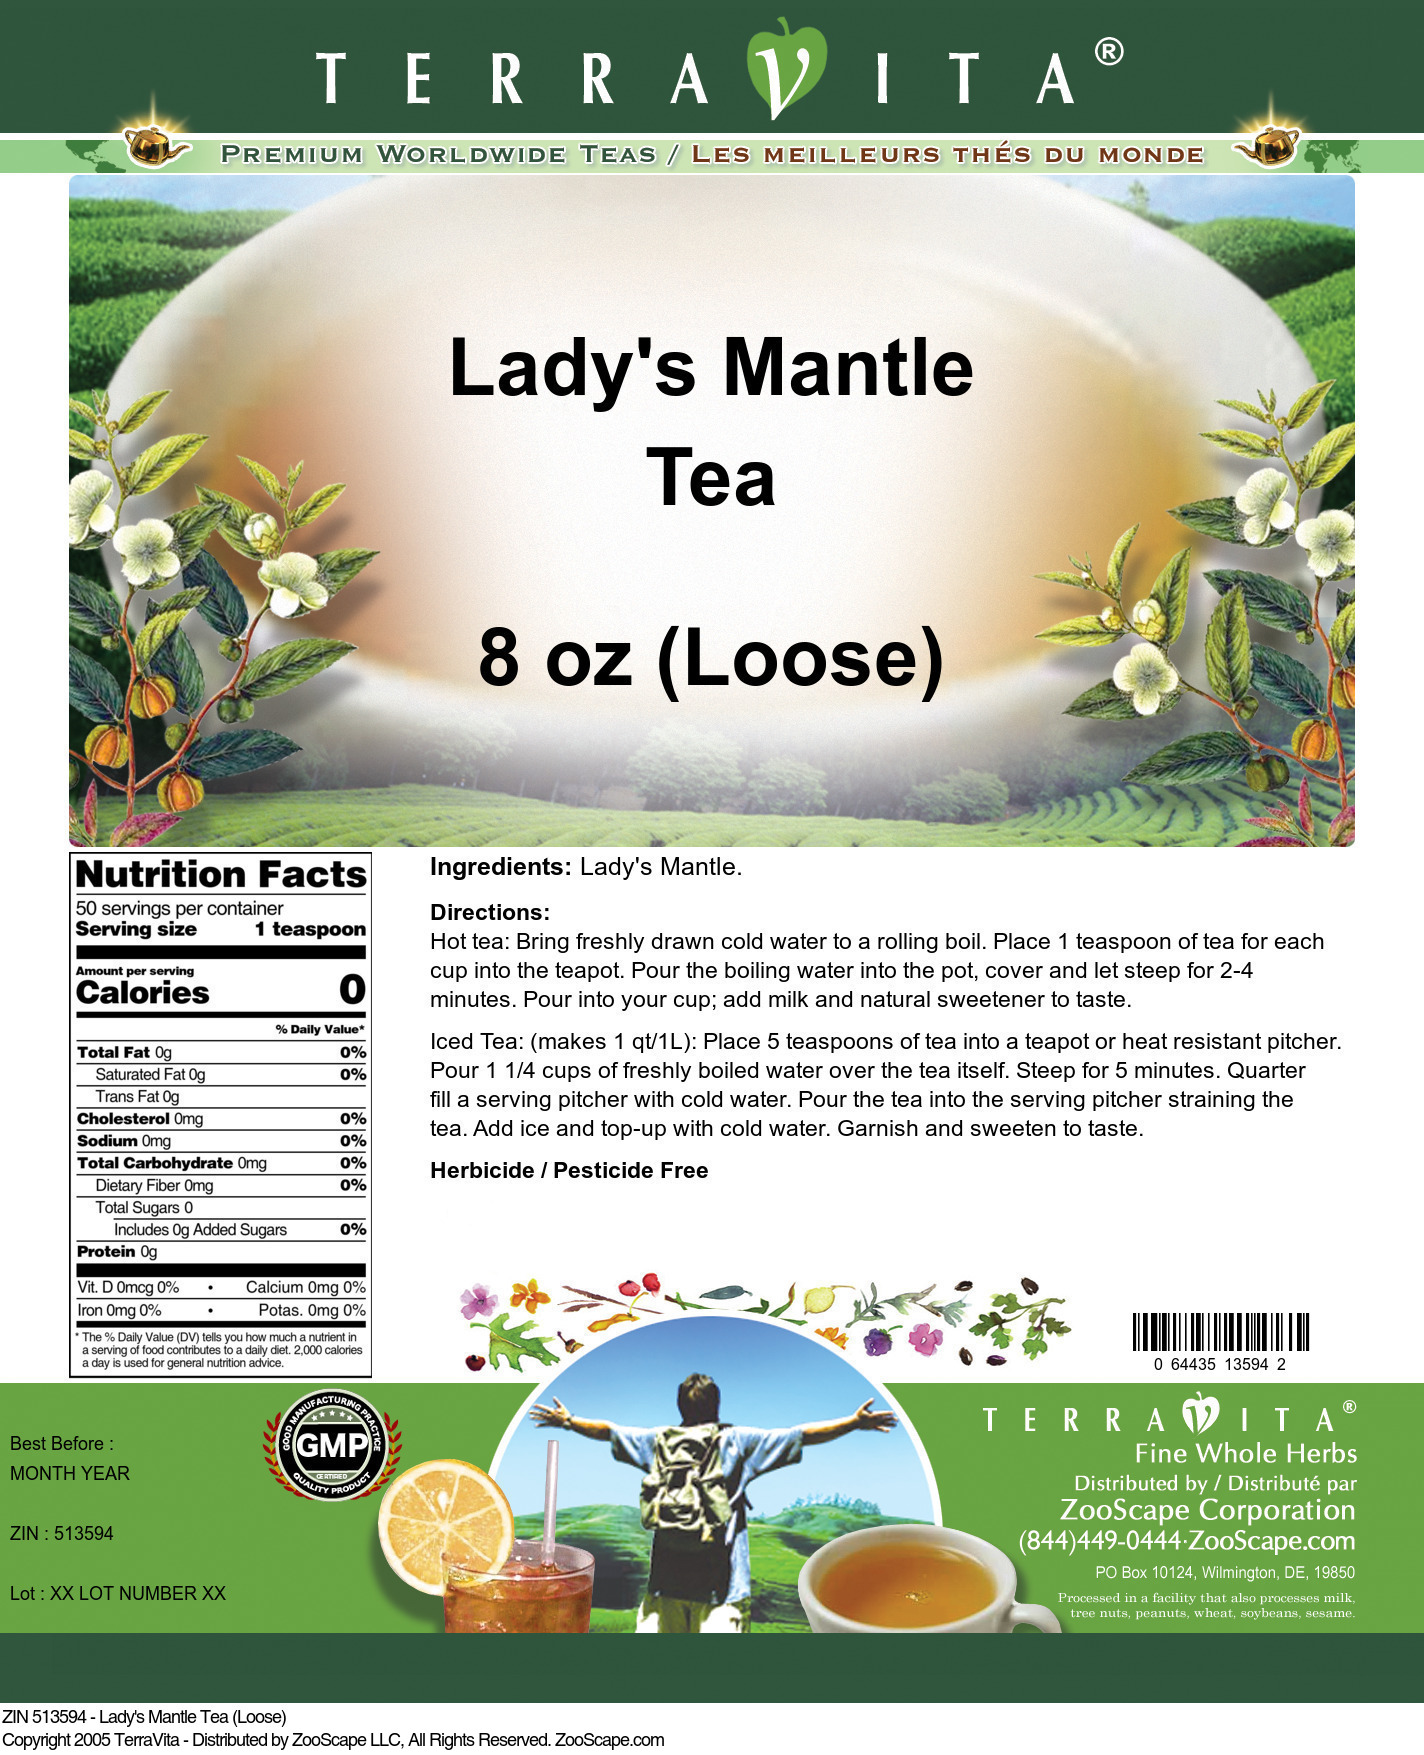 Lady's Mantle Tea (Loose) - Label